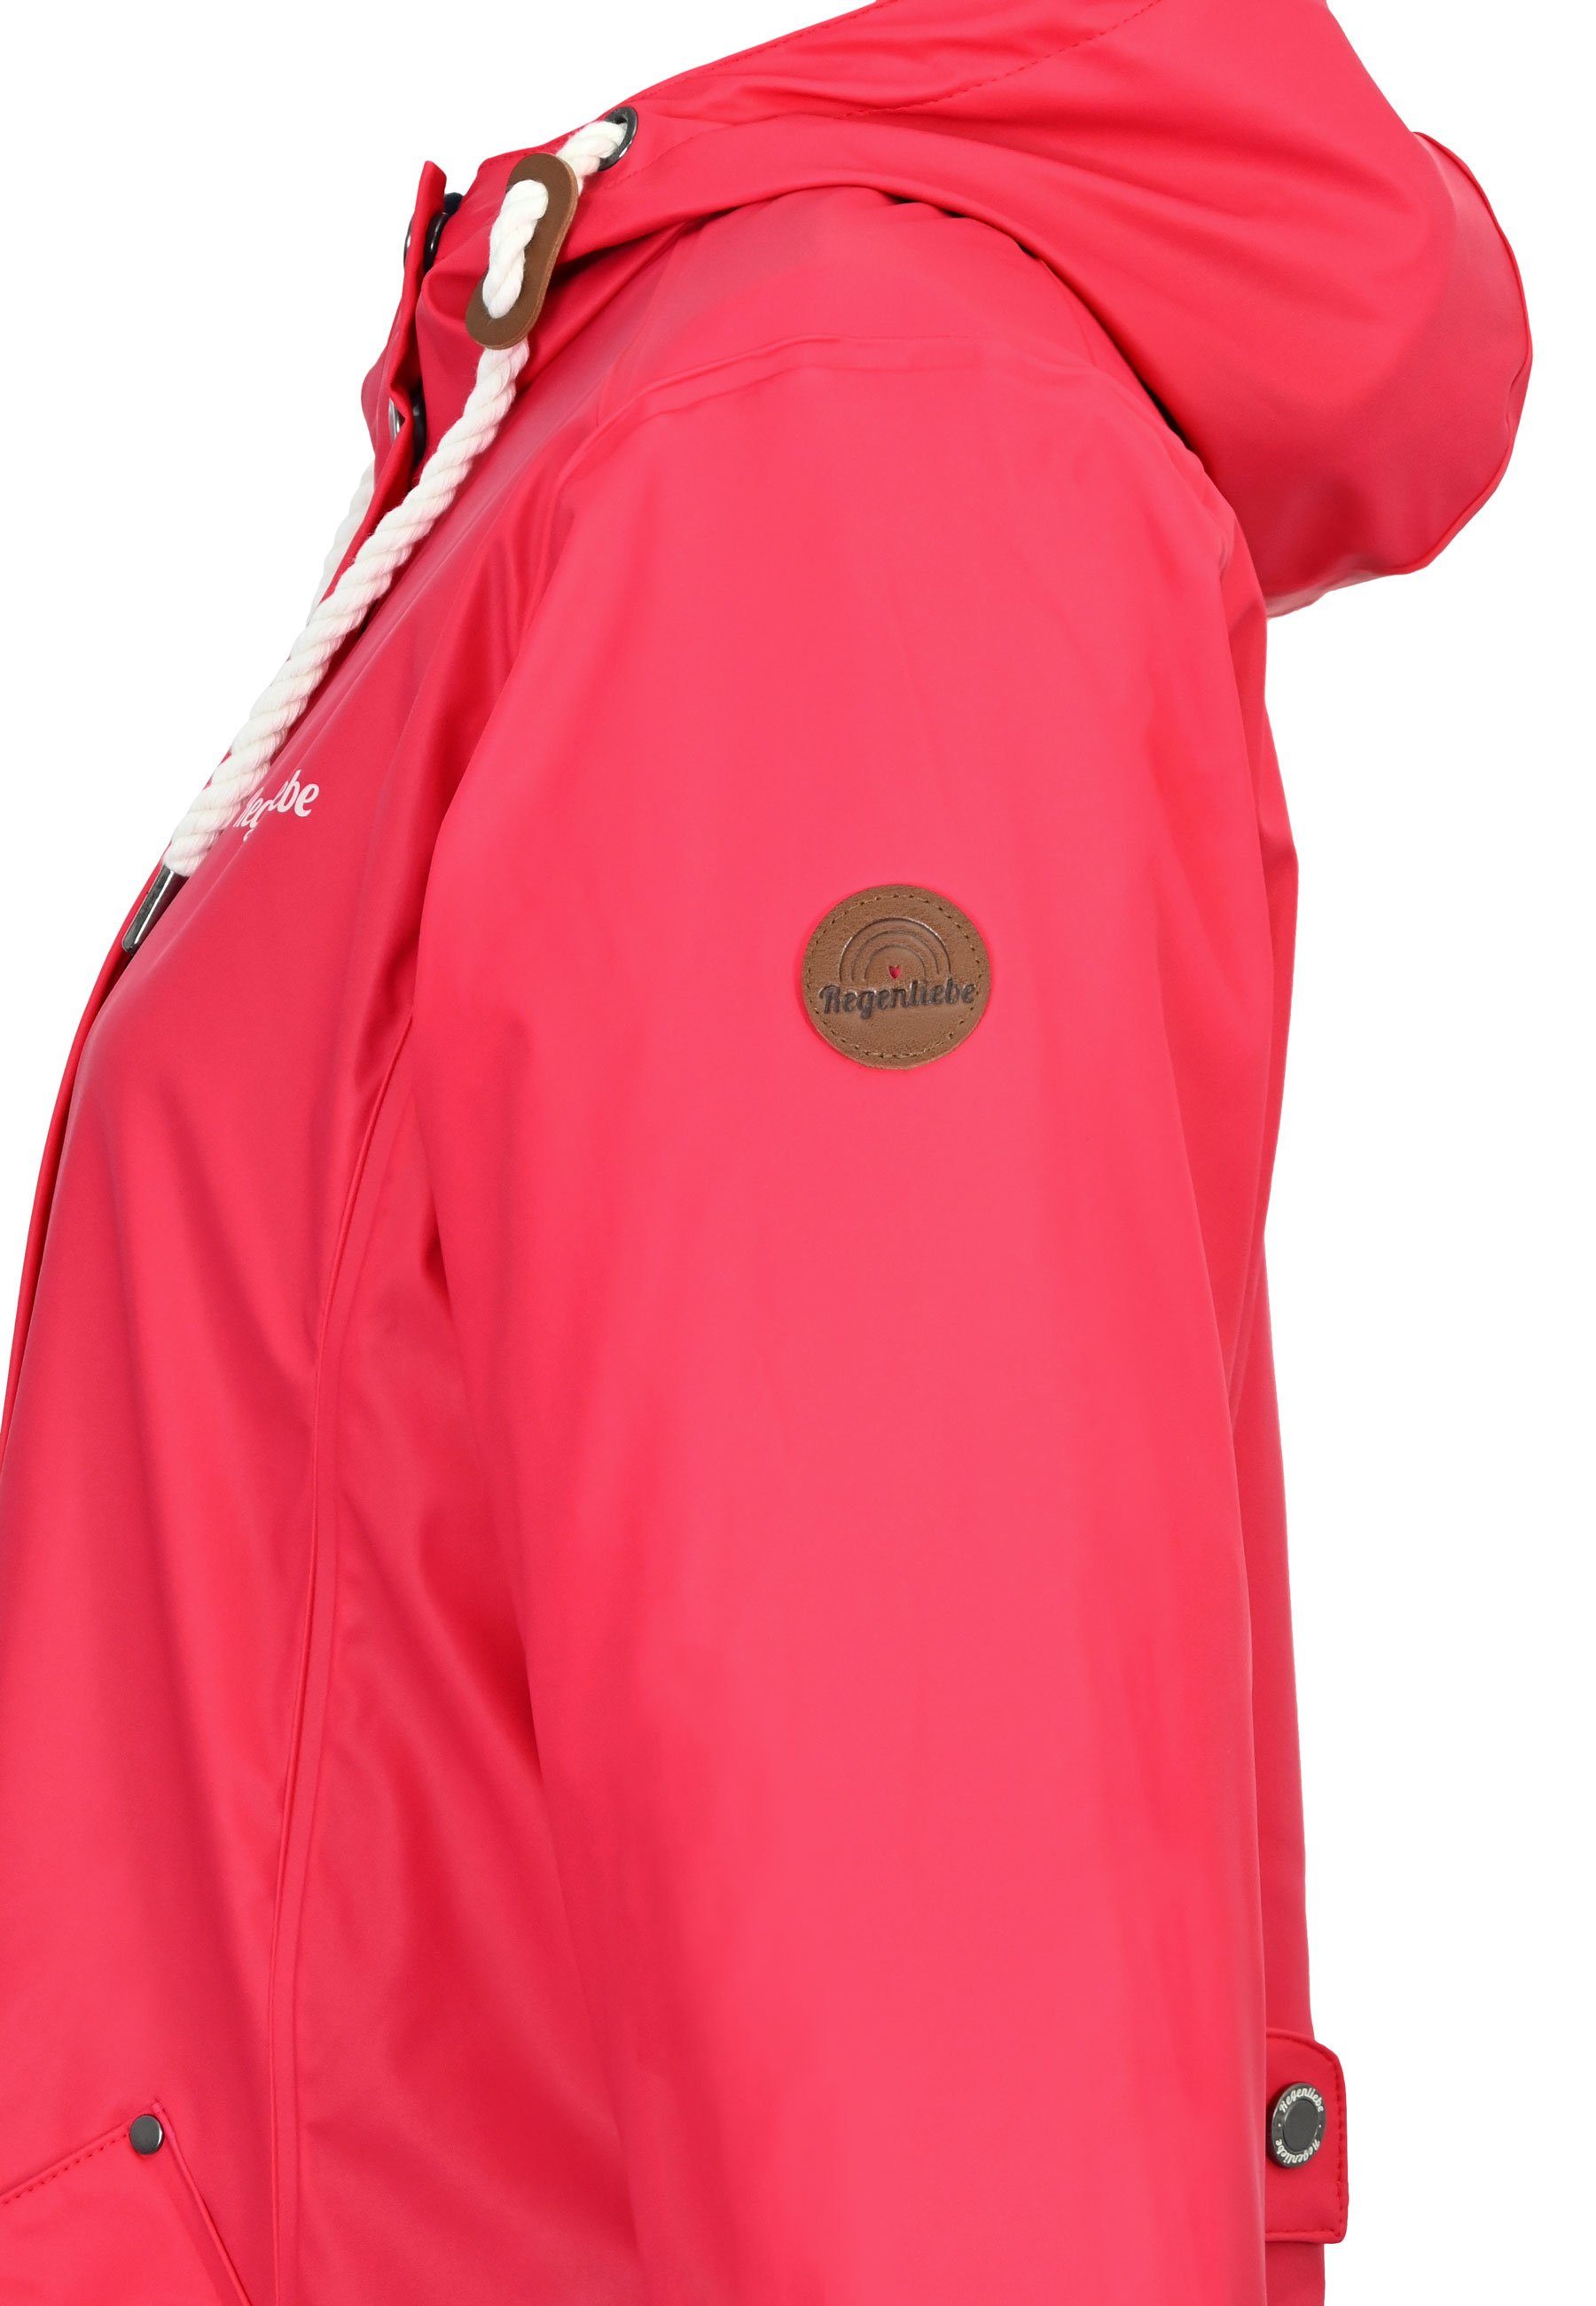 pink mit Regenmantel Regenliebe taillierter Regenjacke Friesennerz Kapuze azalea verstellbaren